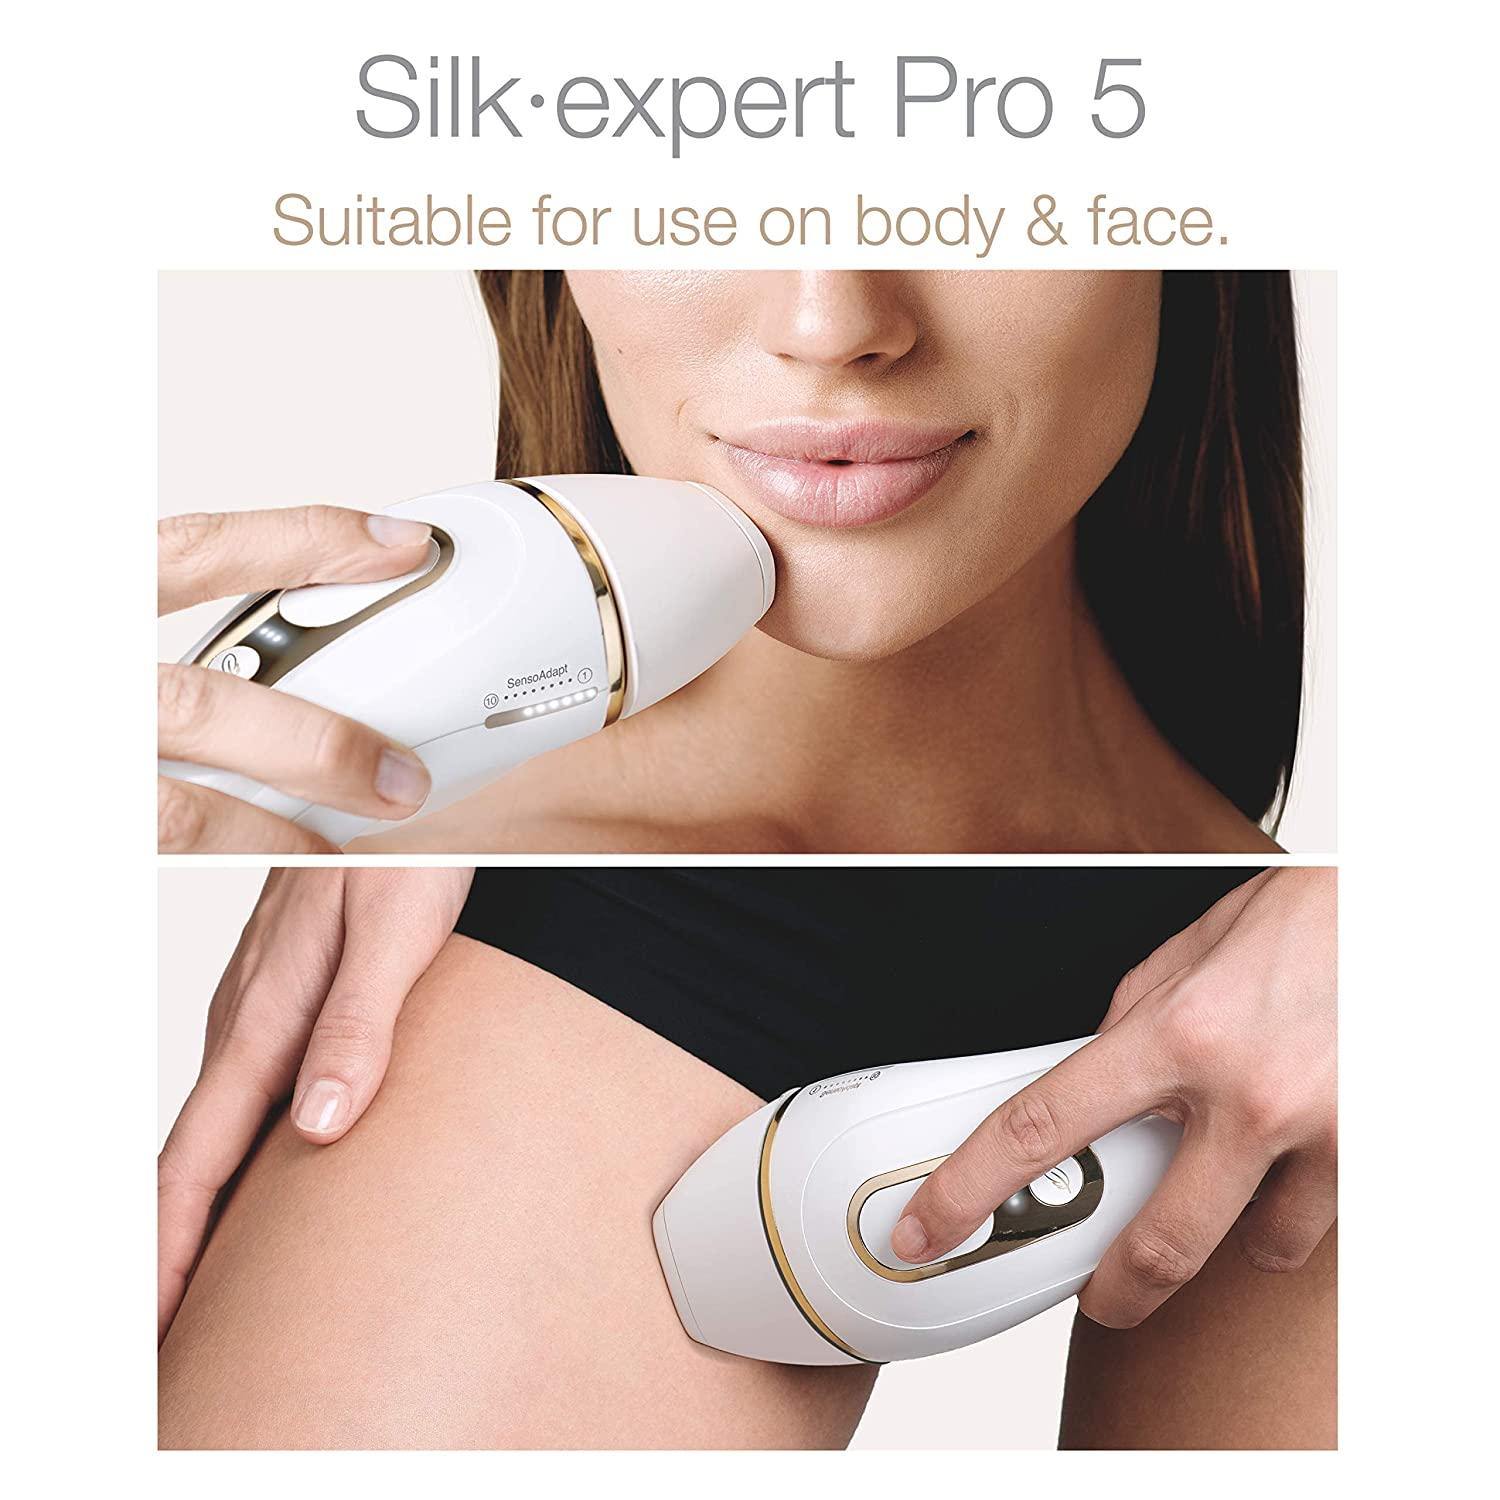 Braun Silk Expert Pro 3 IPL At-Home Hair Removal System for Men & Women